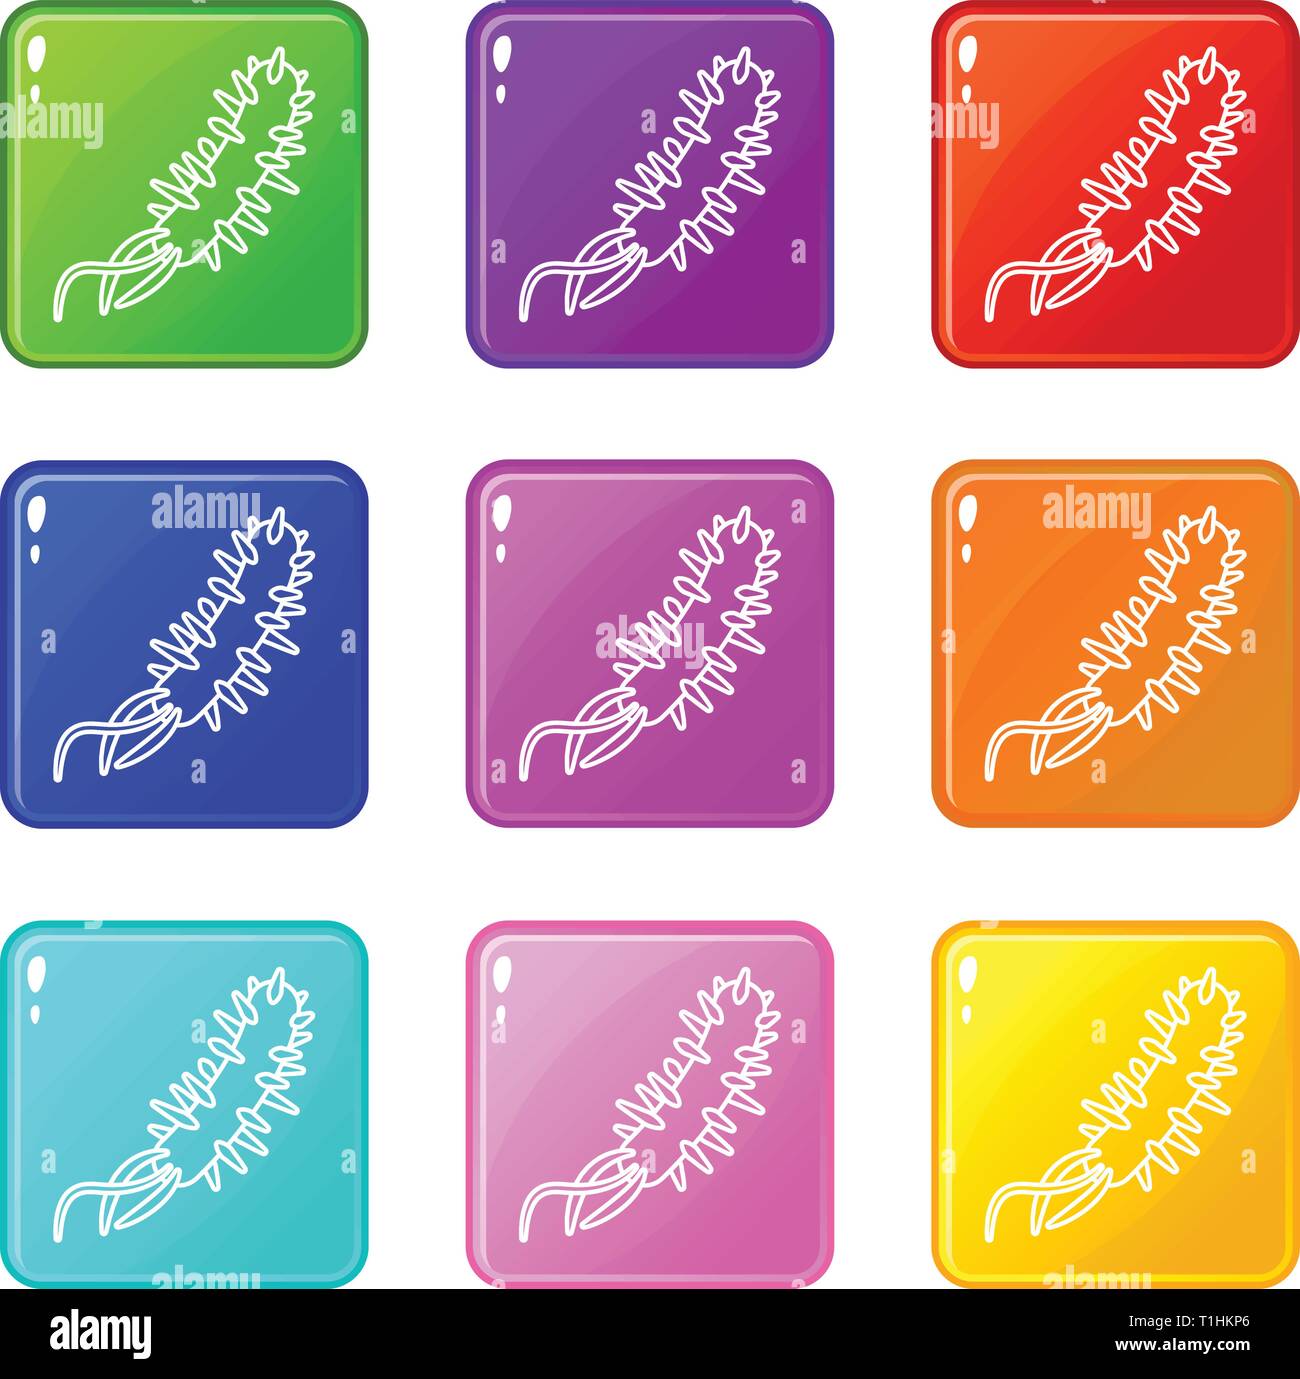 E coli bacteria icons set 9 color collection Stock Vector